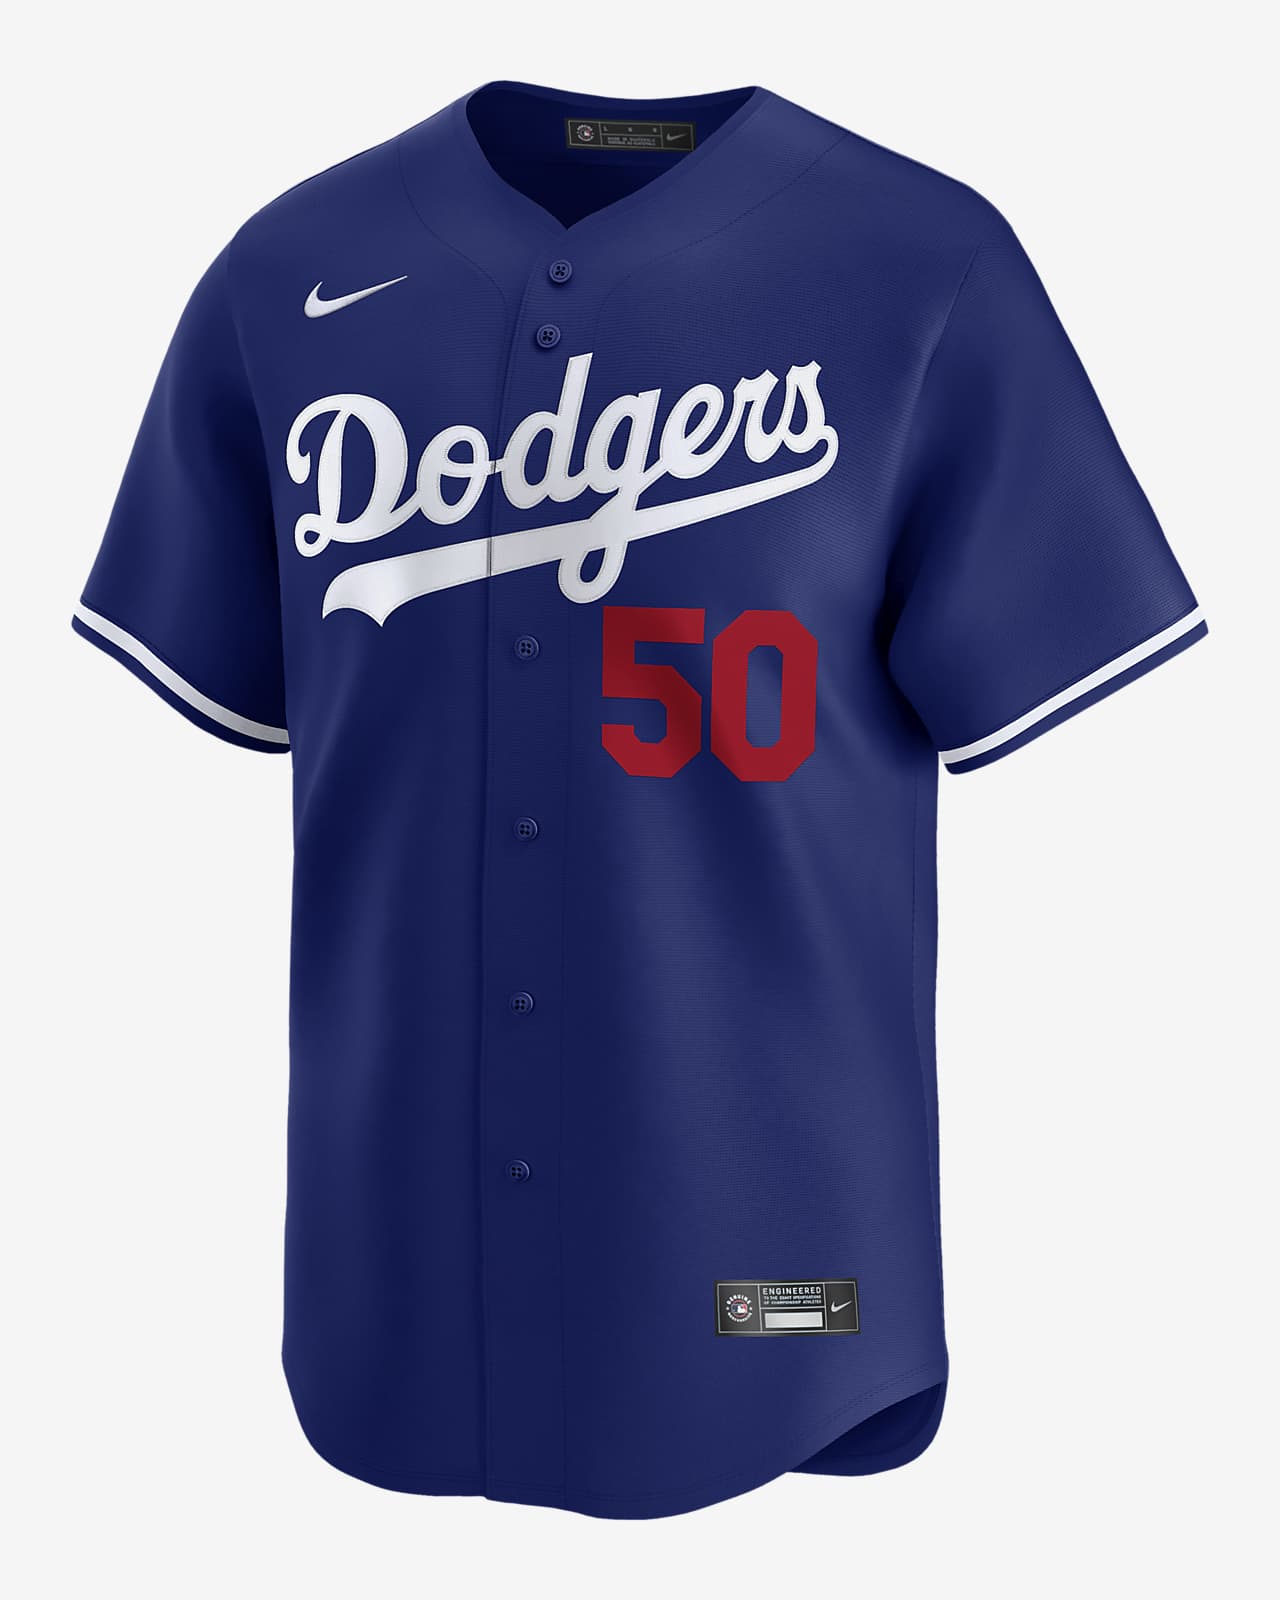 Jersey Nike Dri-FIT ADV de la MLB Limited para hombre Mookie Betts Los Angeles Dodgers